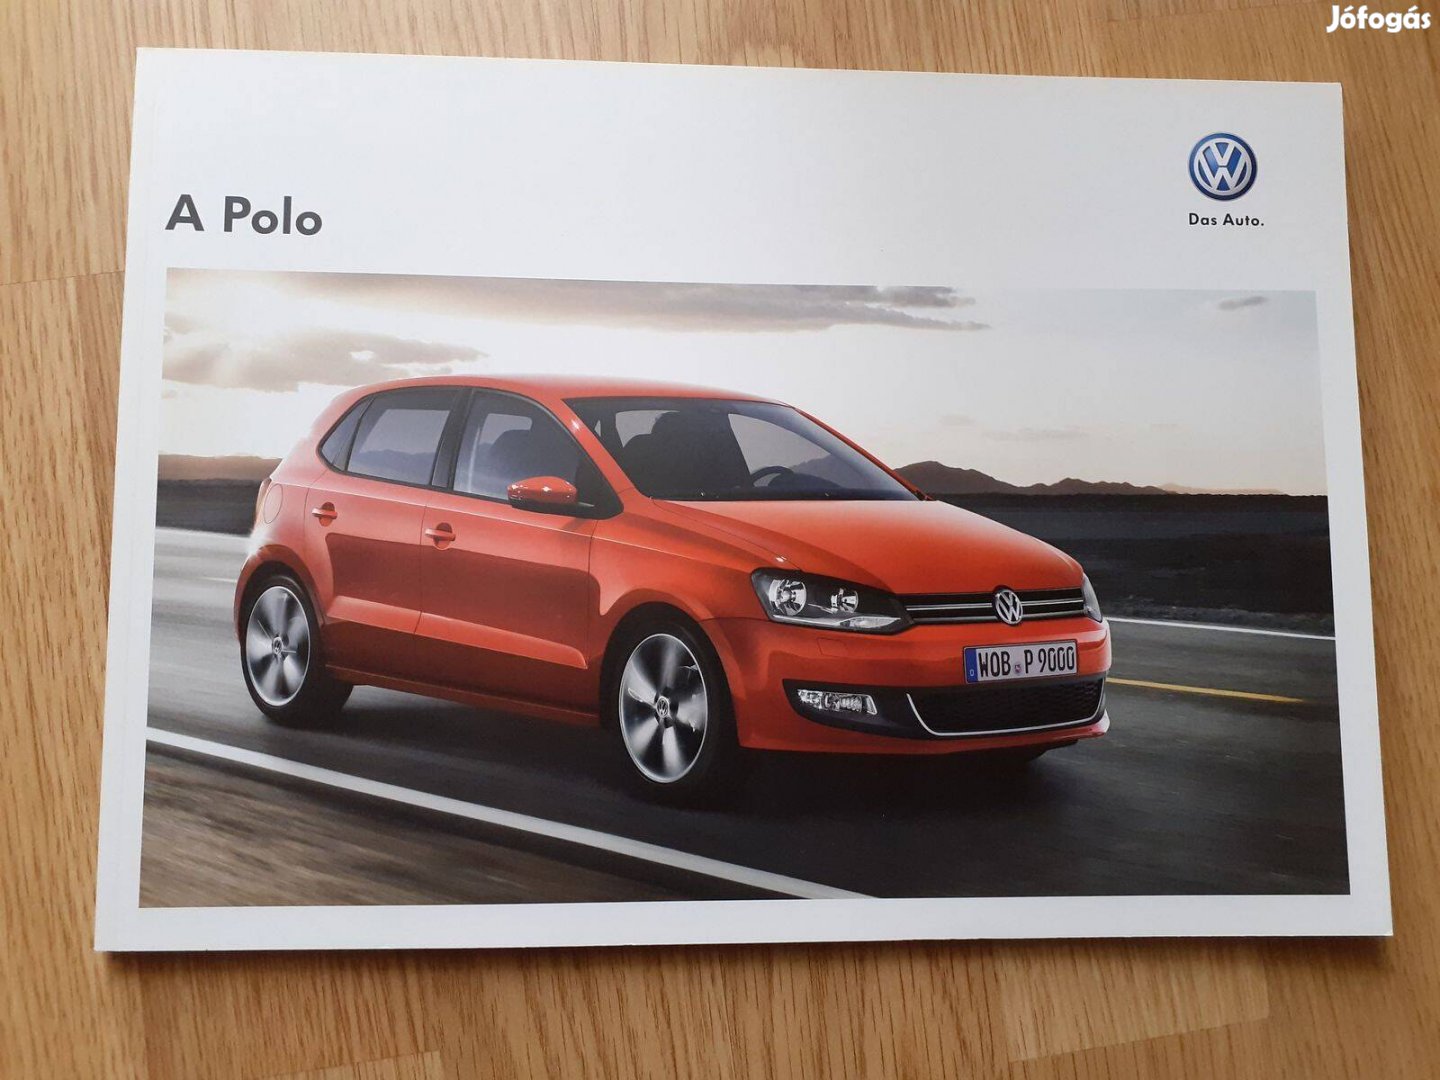 Volkswagen Polo prospektus - 2012, magyar nyelvű